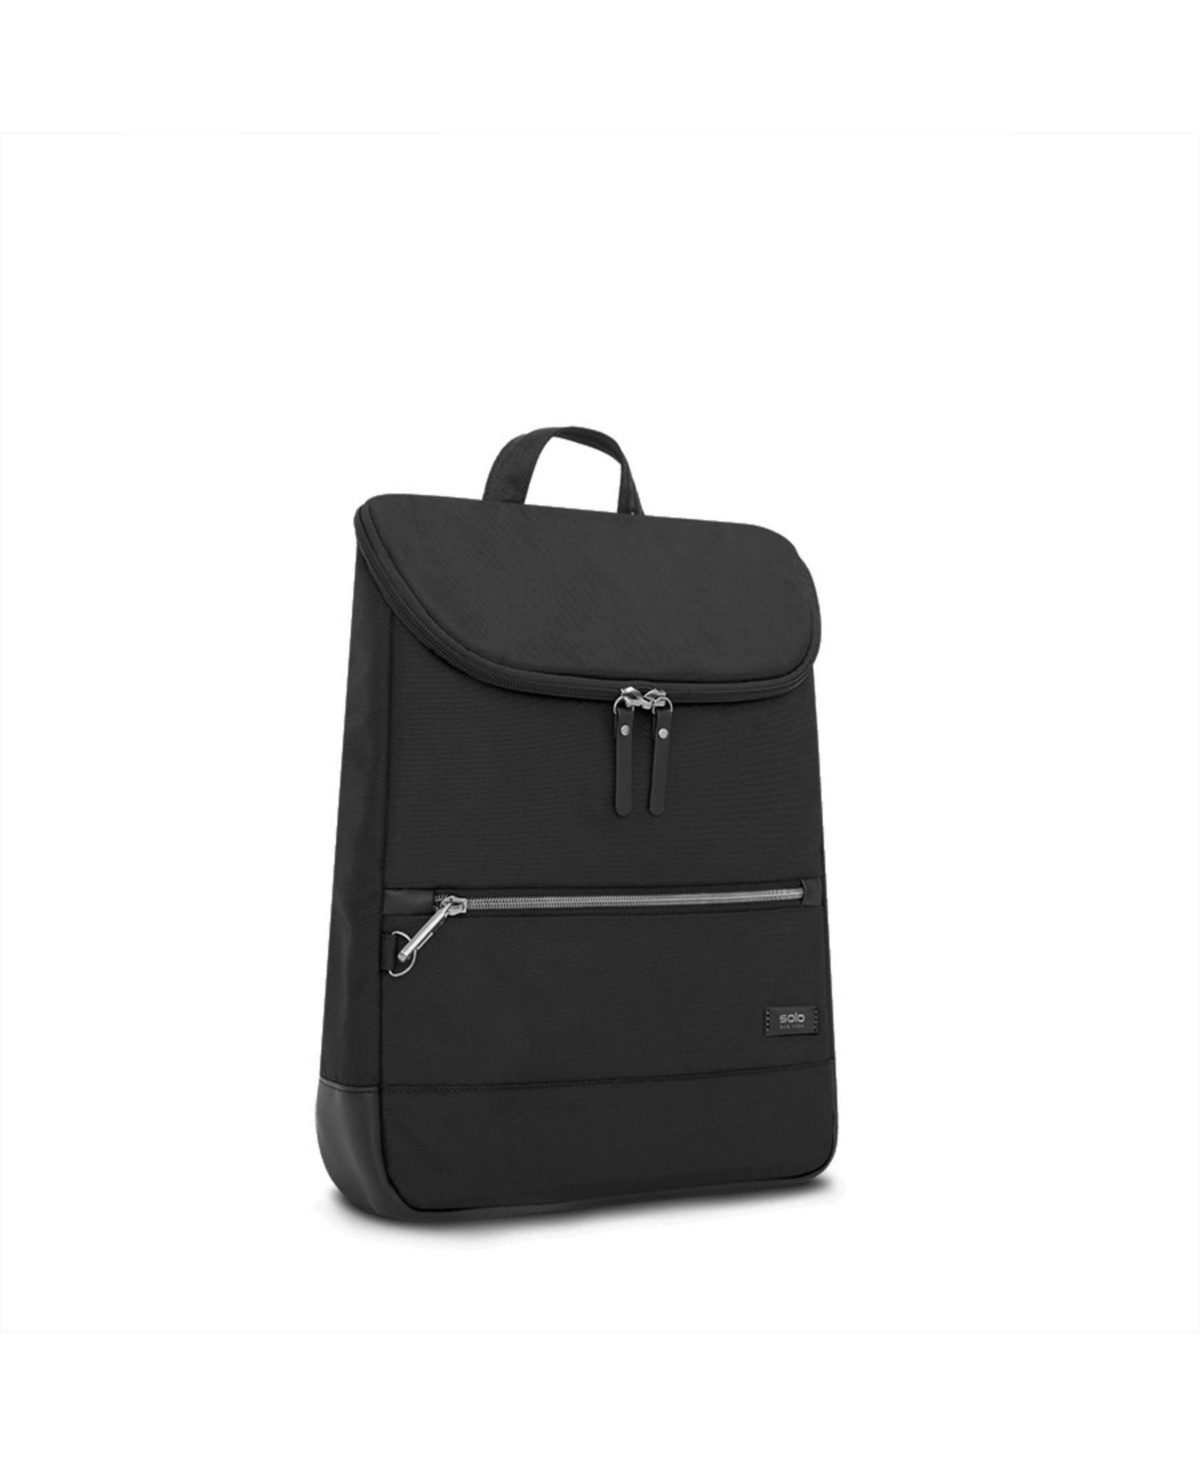 Solo Stealth Hybrid Backpack In Black